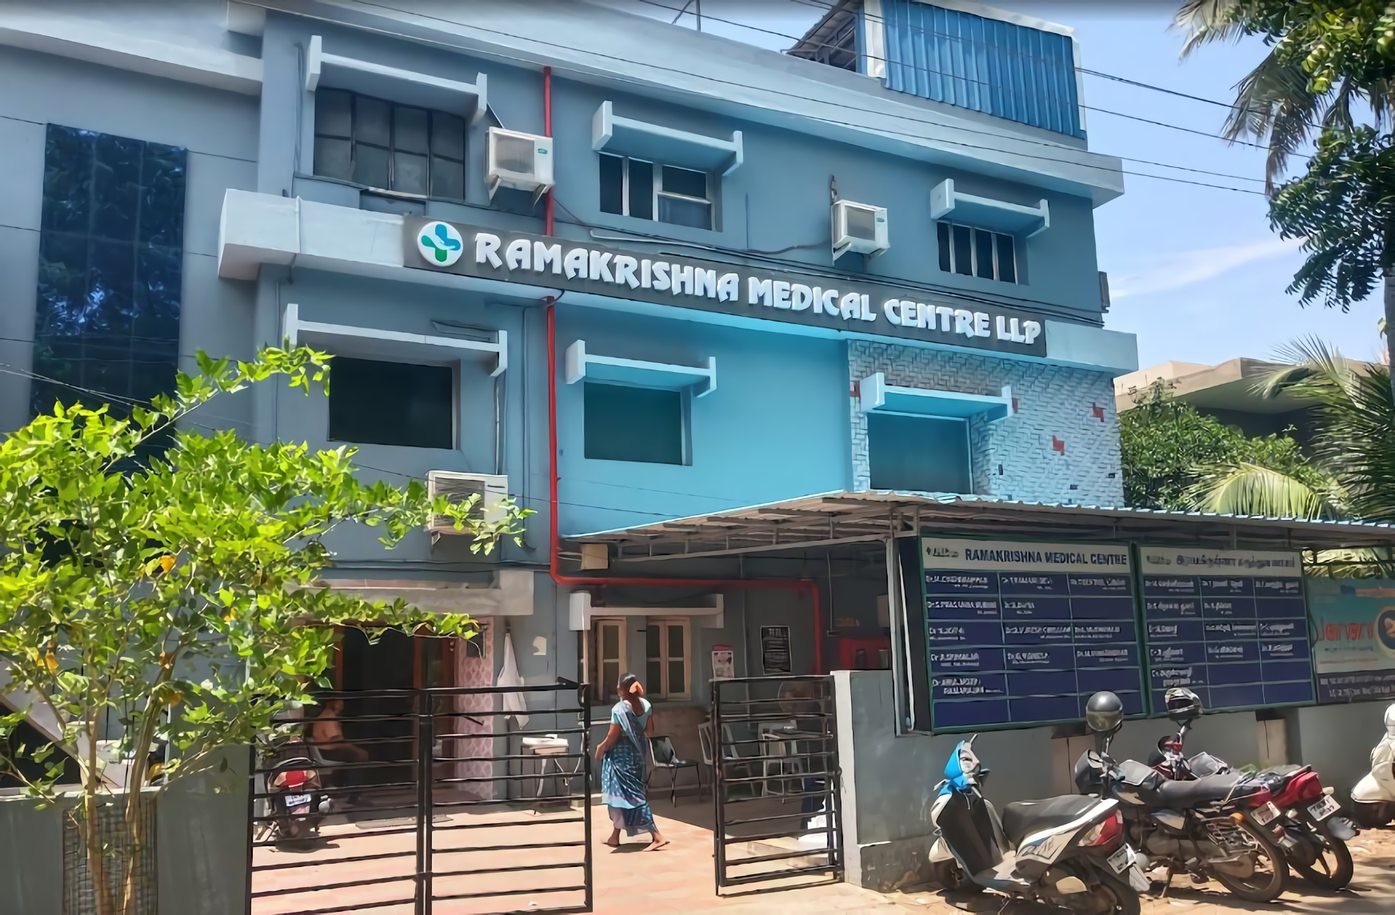 Ramakrishna Medical Centre LLP